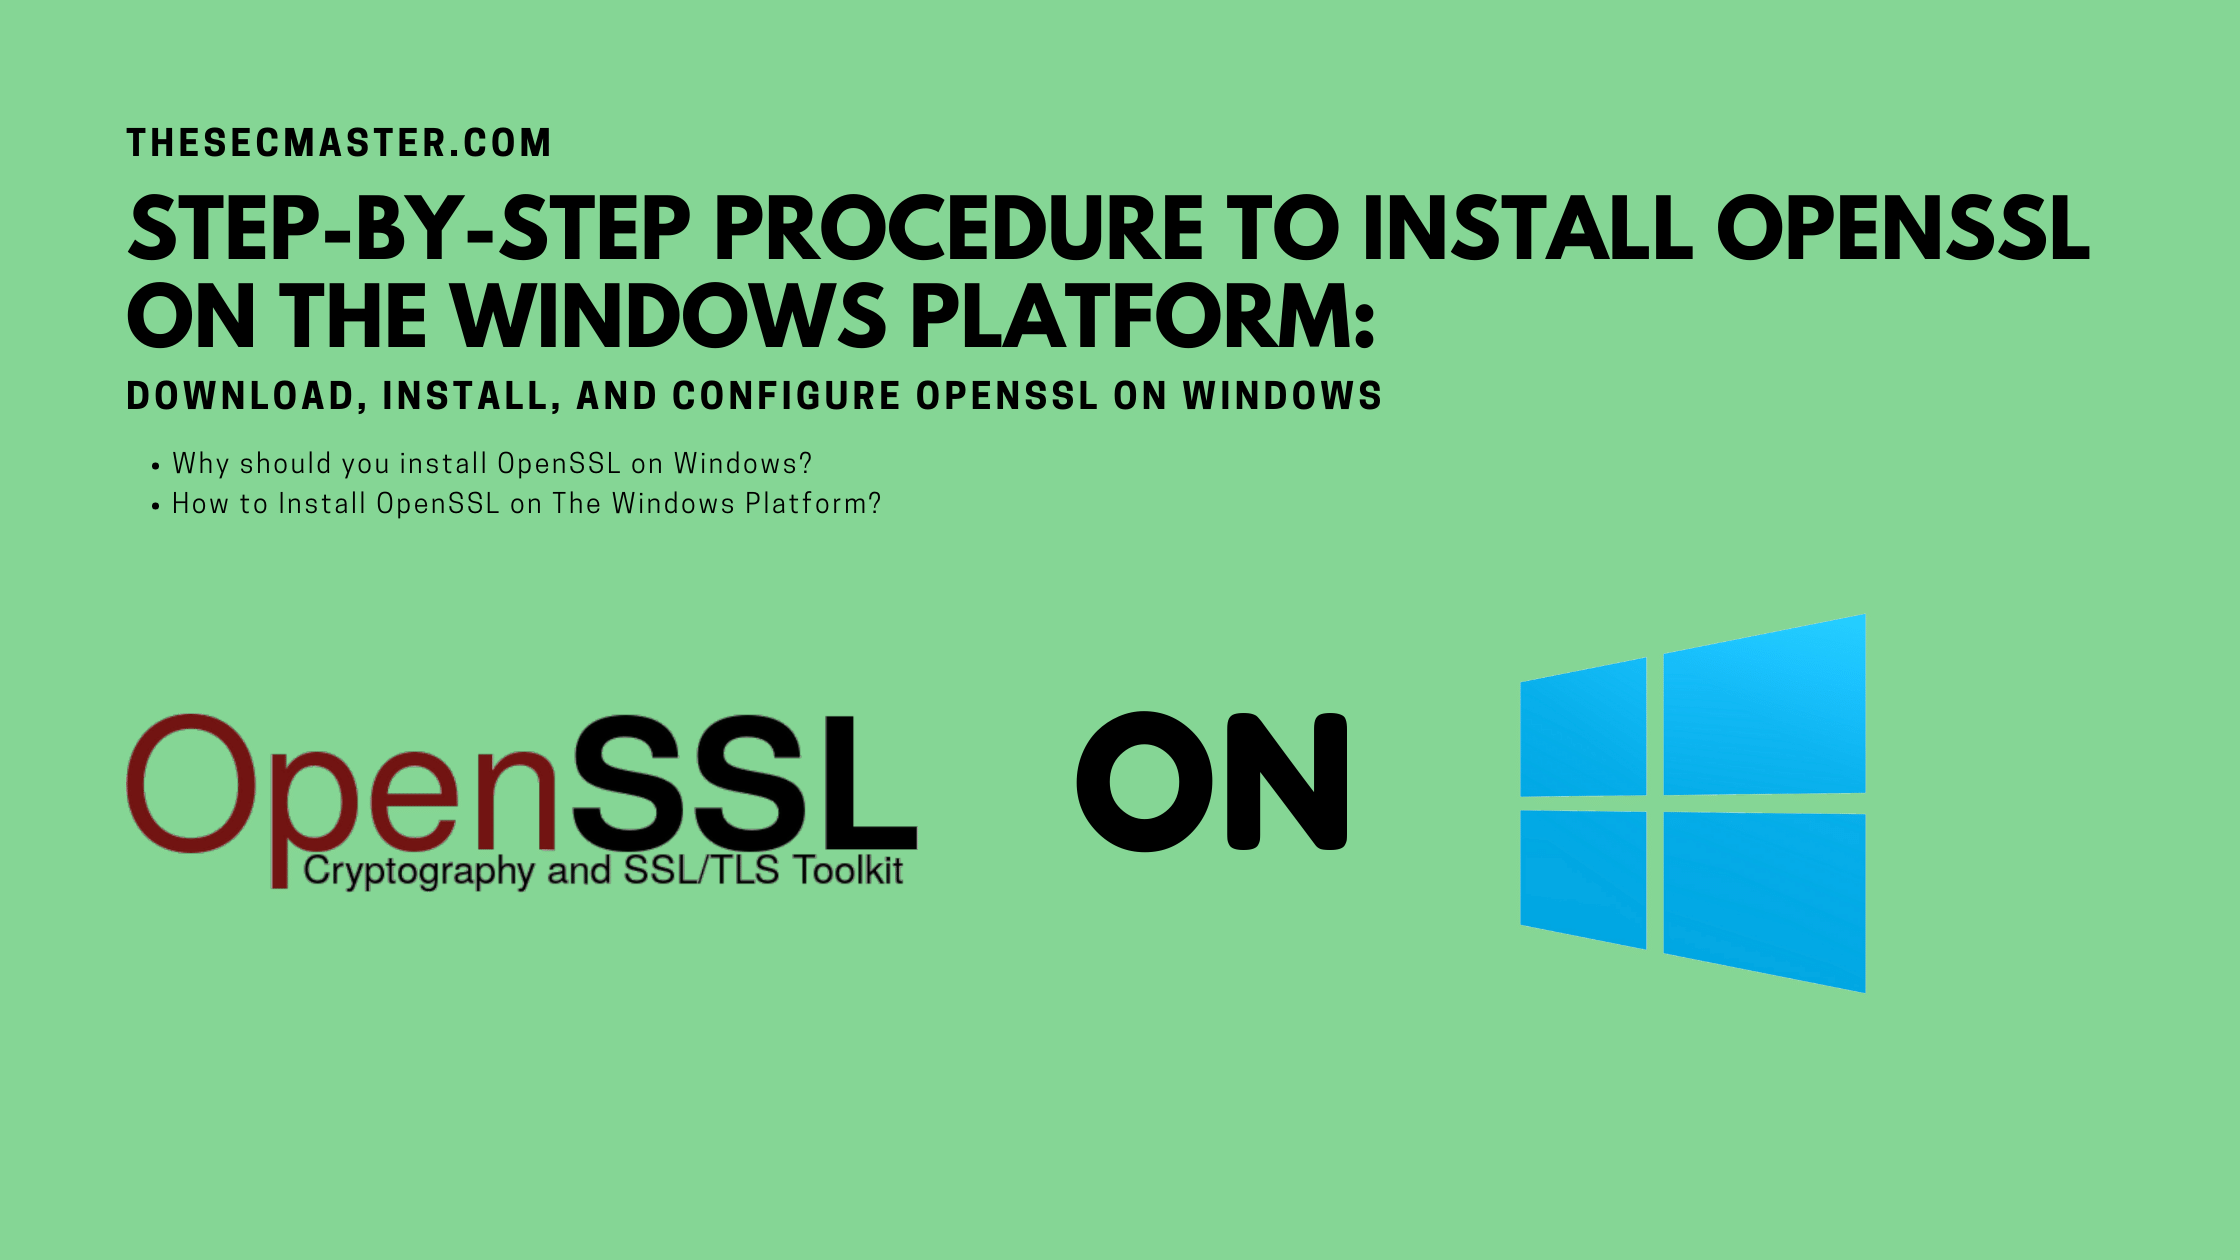 Procedure To Install Openssl On The Windows Platform